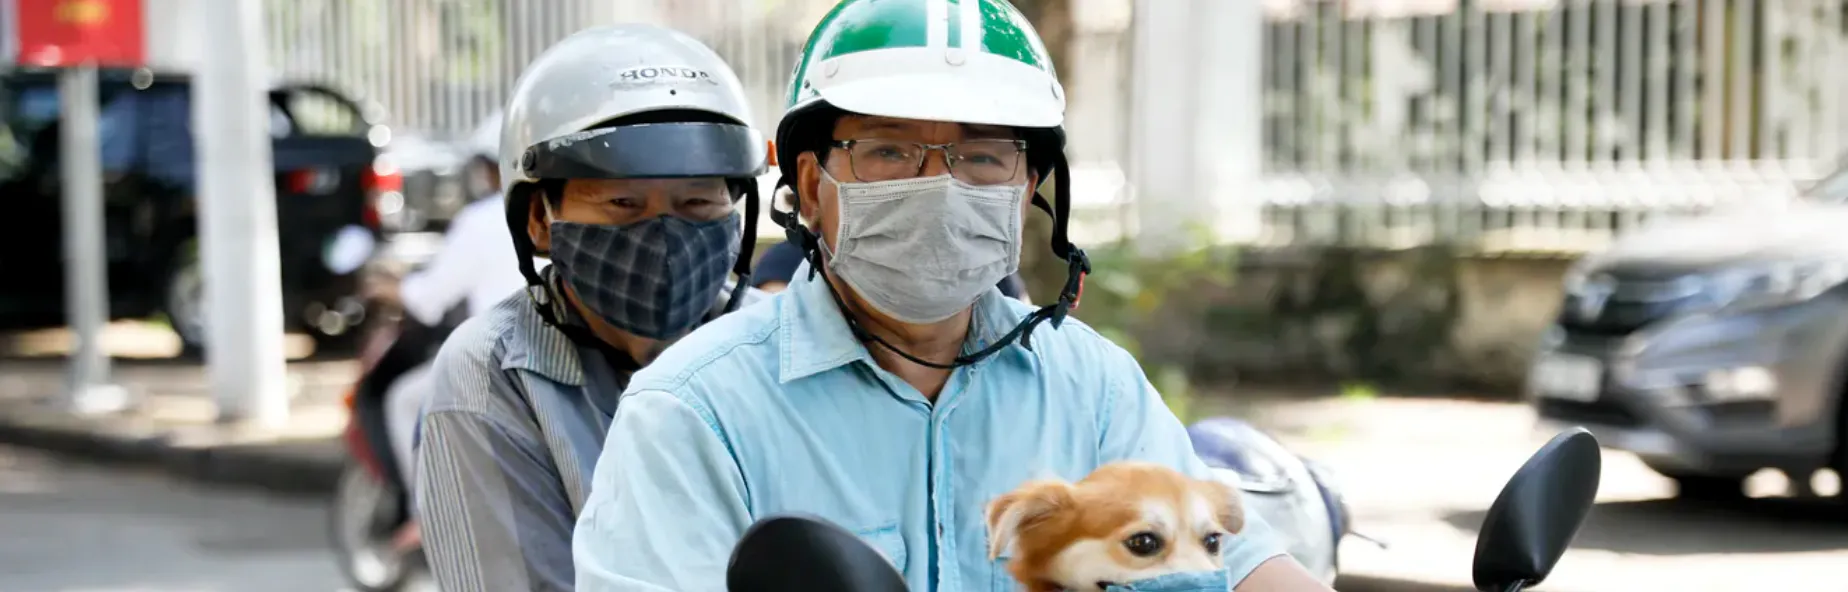 Vietnamese man on scooter